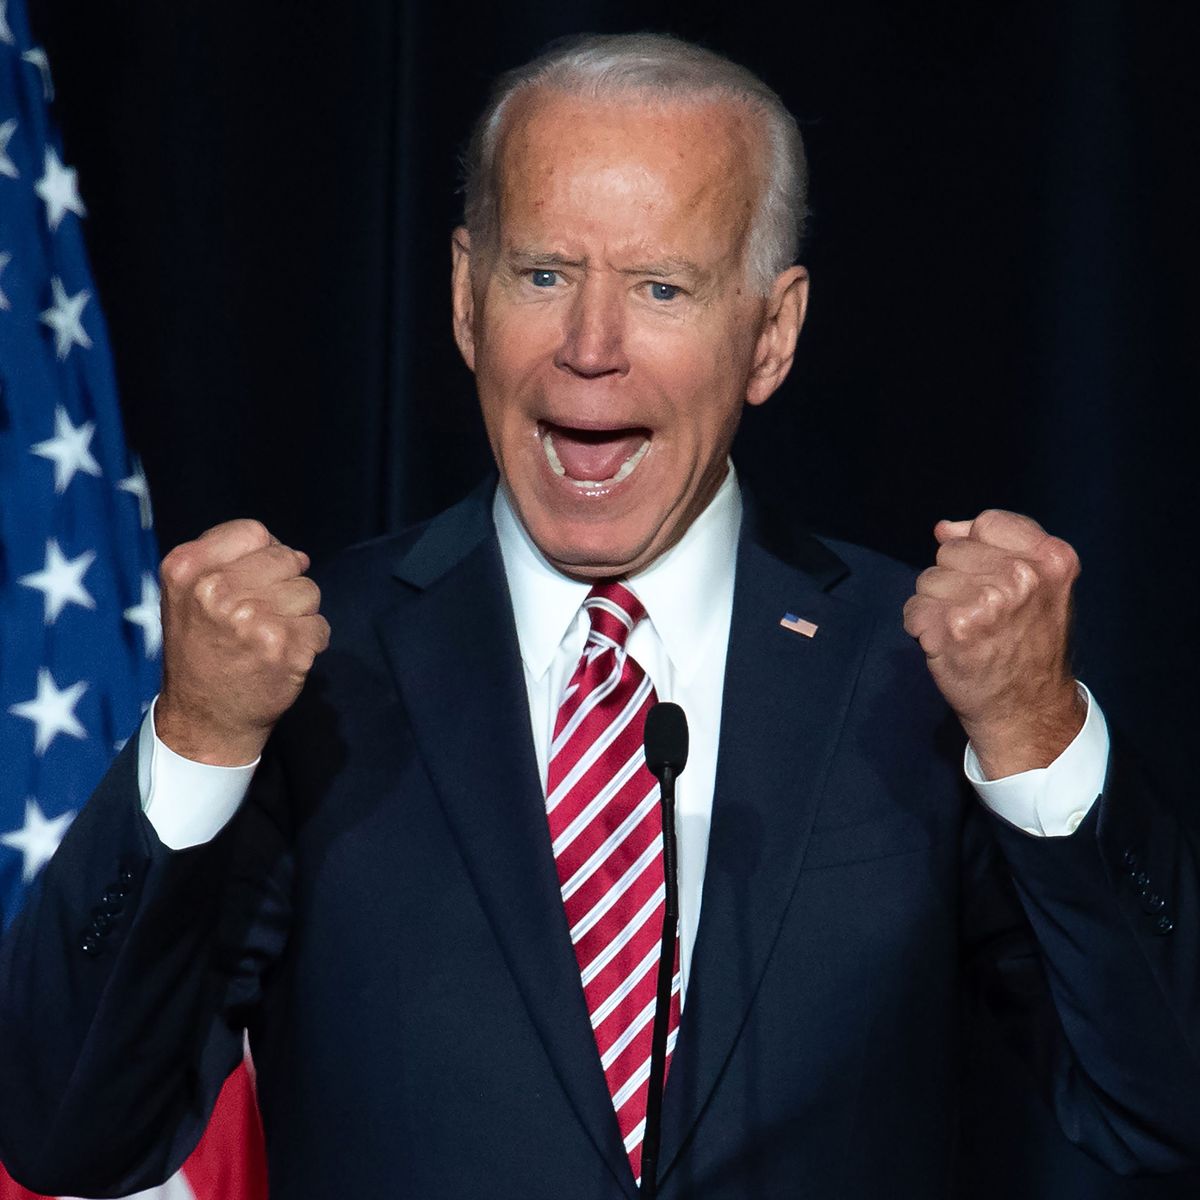 Biden to Debate Wearing Brain Implant, 'Super Bazooka' Arms